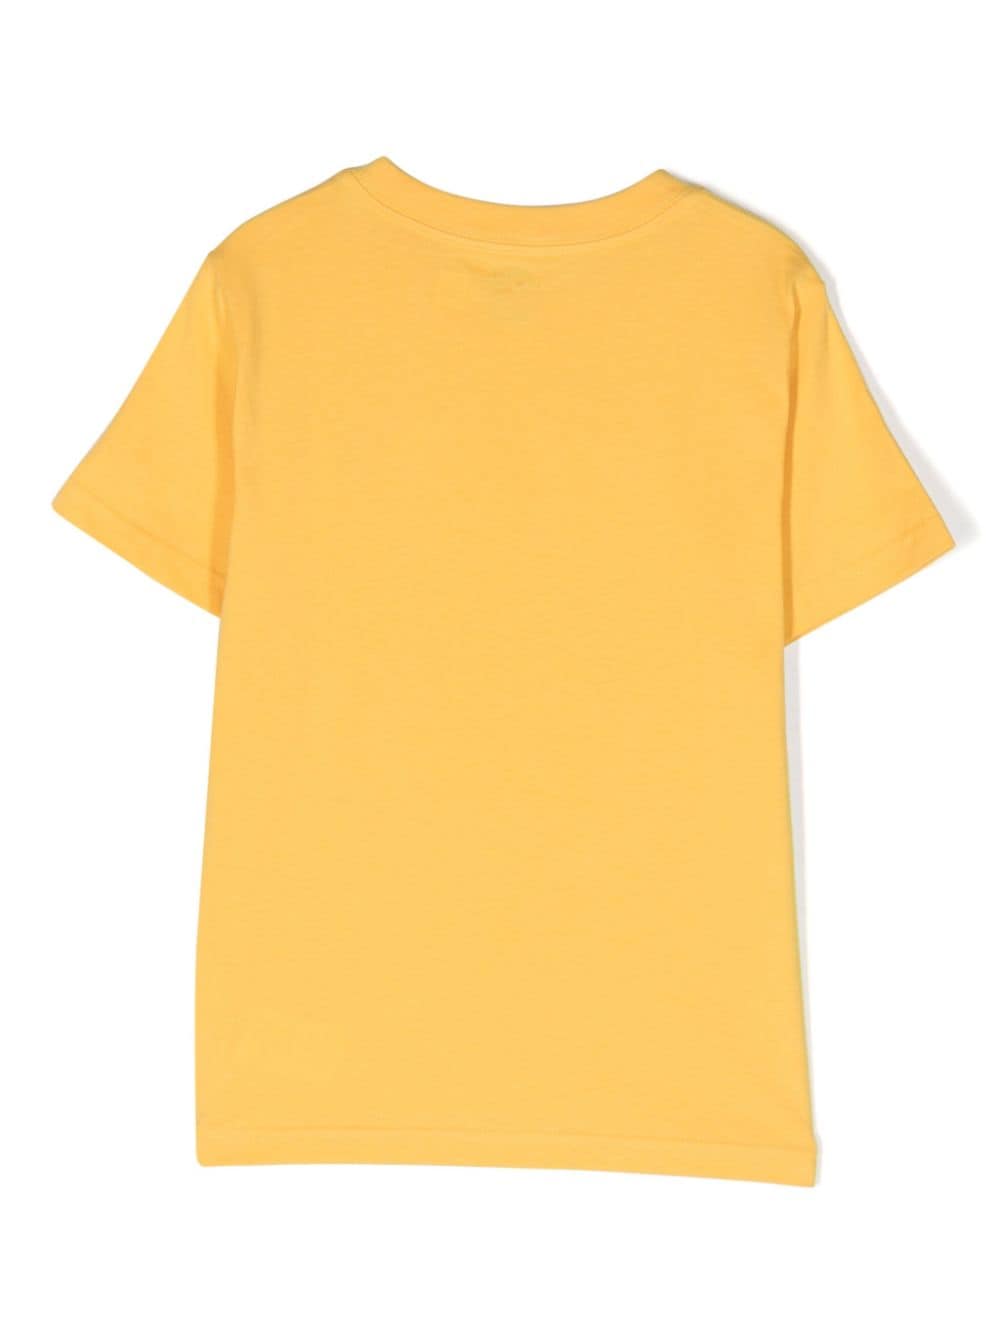 T-shirt gialla bambino